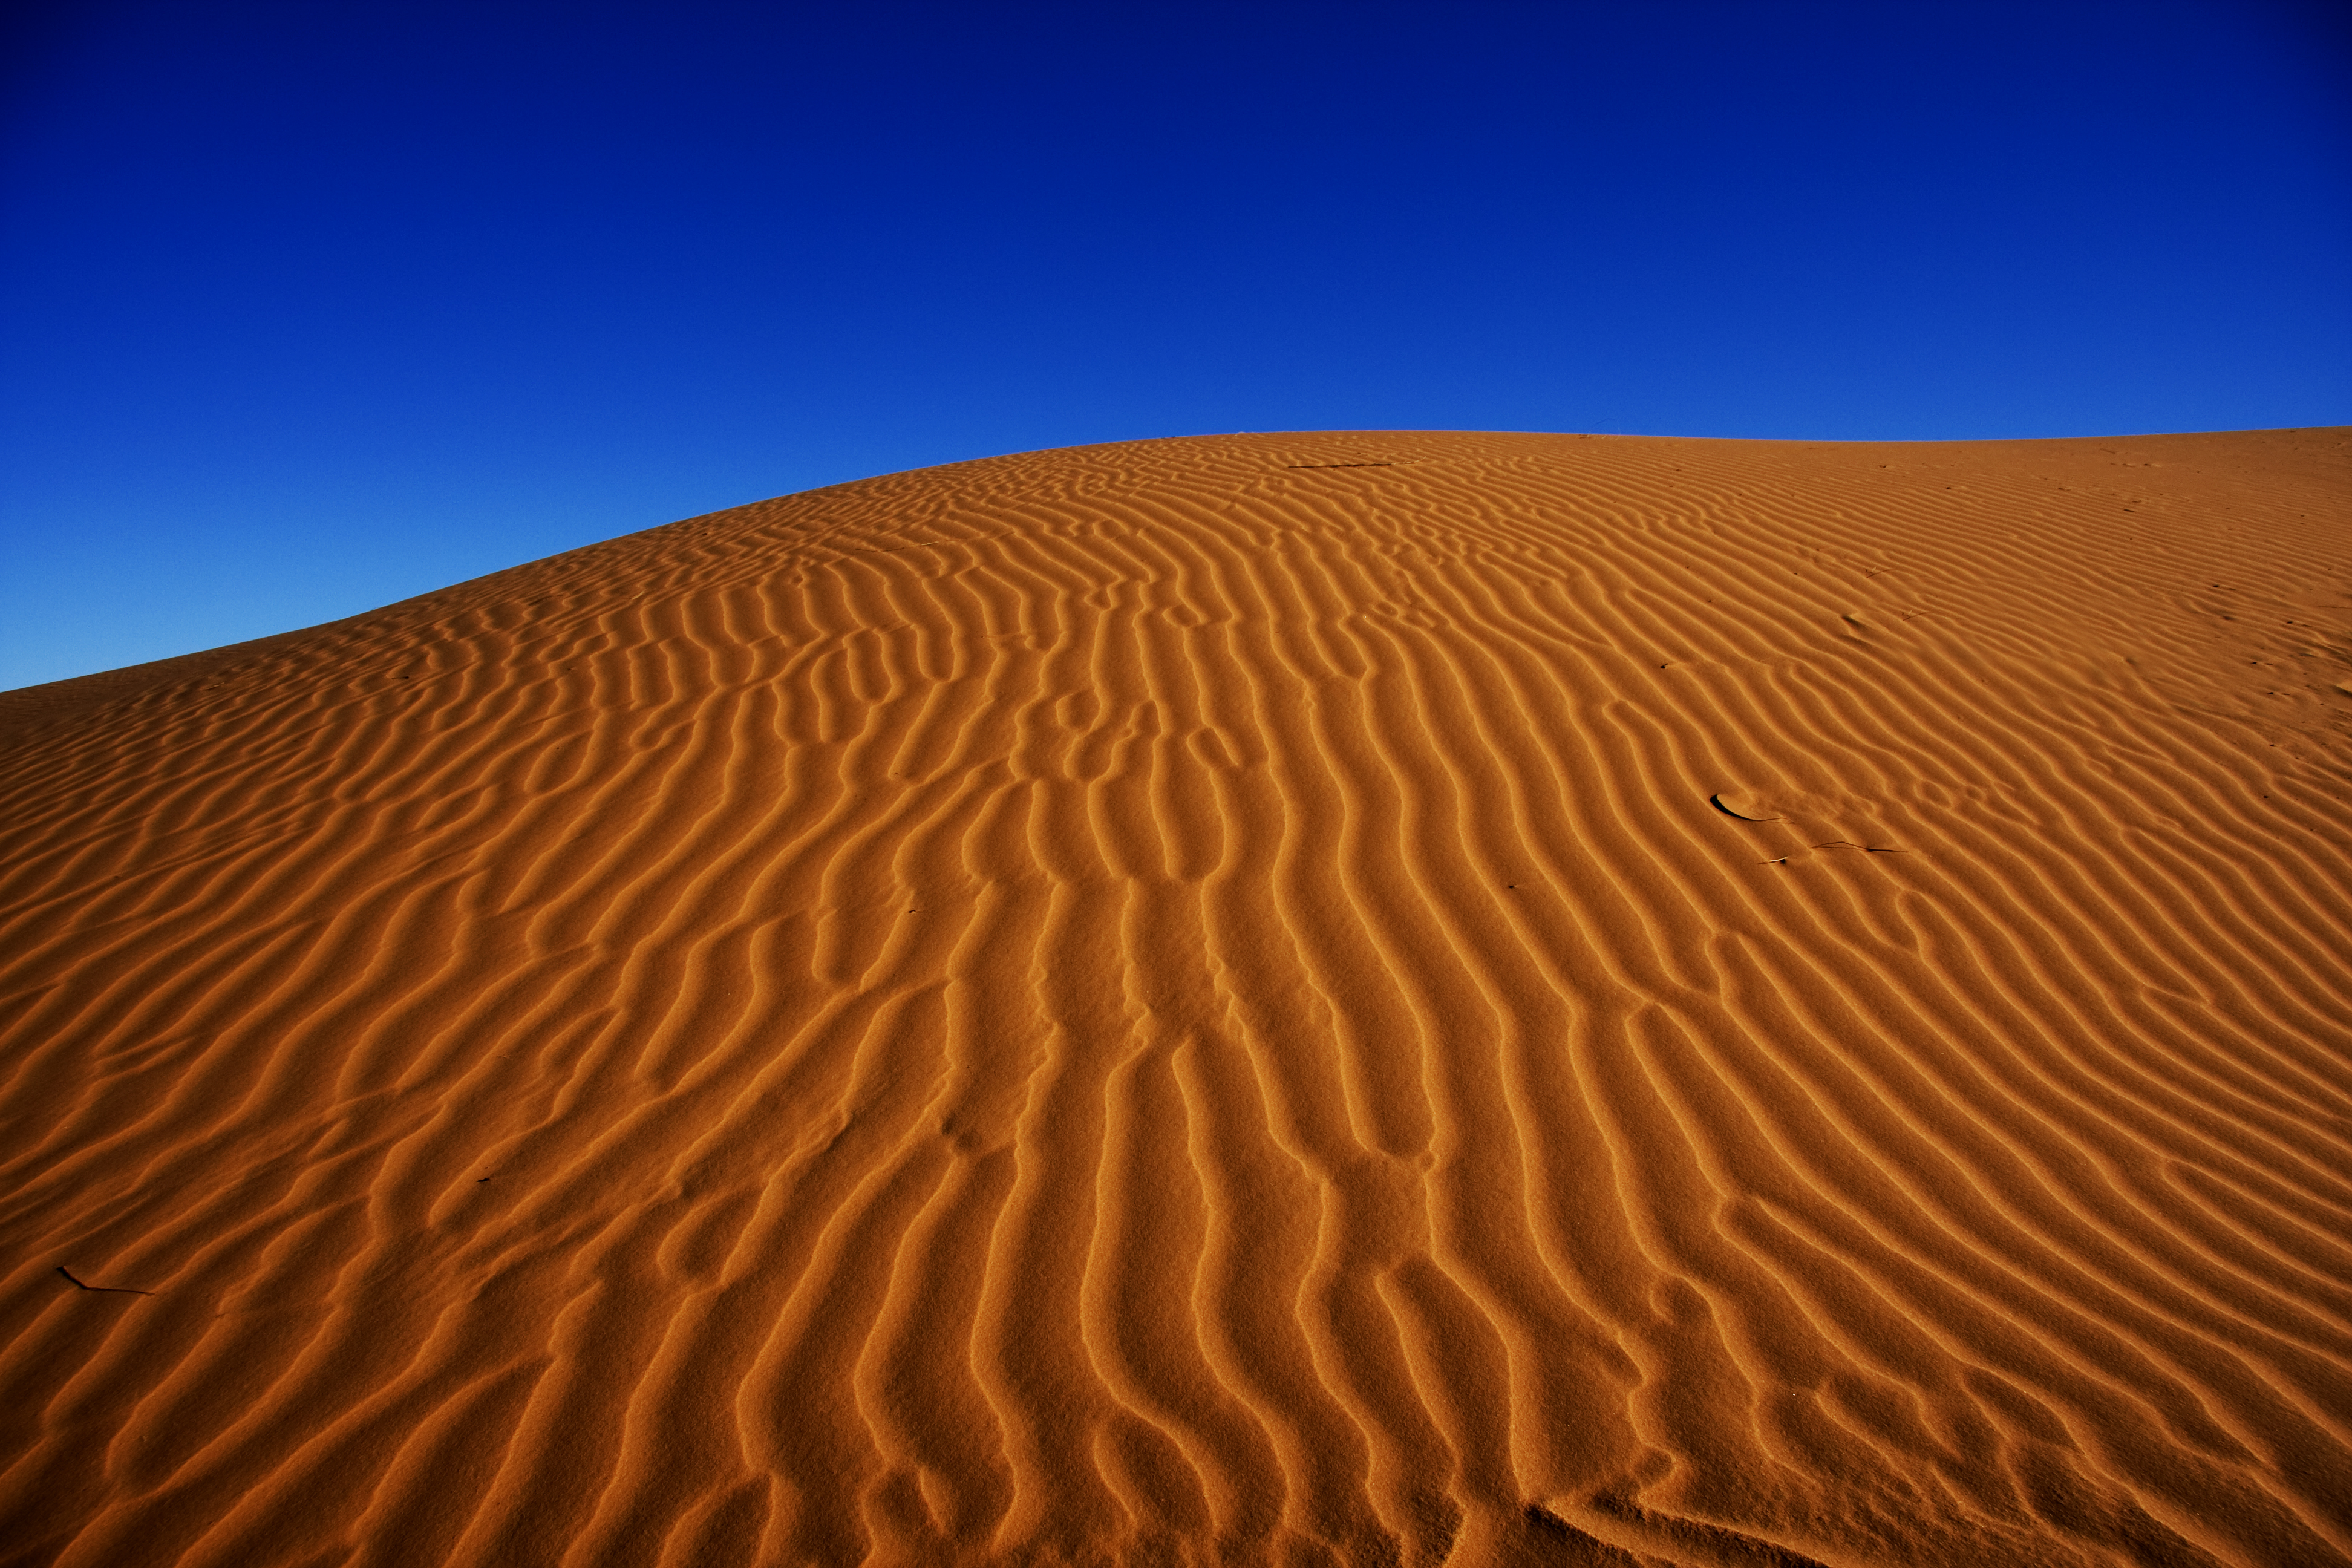 Пустыня. Песчано-эоловая пустыня Сахары. Пустыня сахара (Sahara Desert). Дюна сахара Африка. Пустыня дюны 4к.